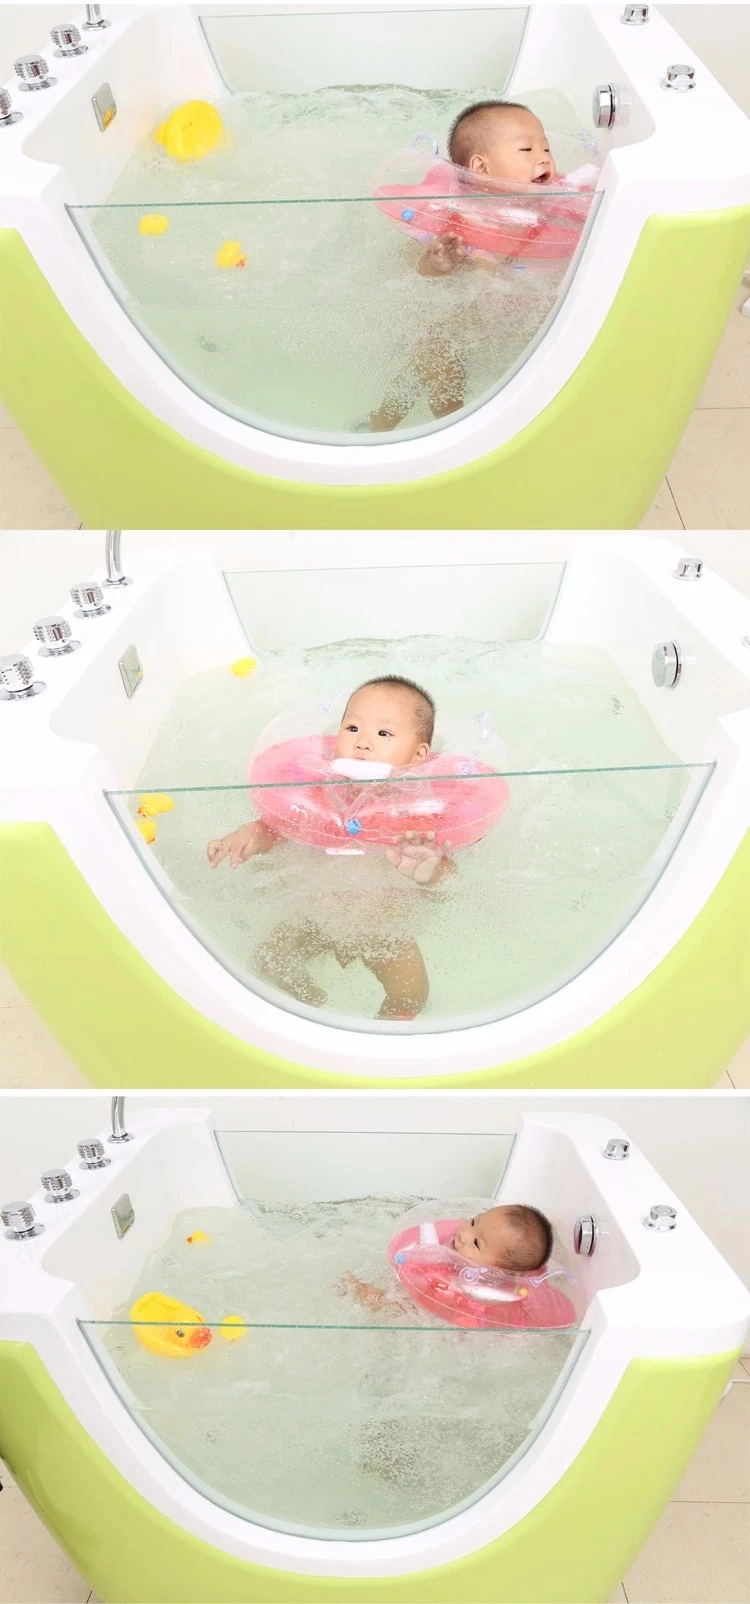 Hot Selling Small Size Bathroom Kids Deep Baby Bath Tub